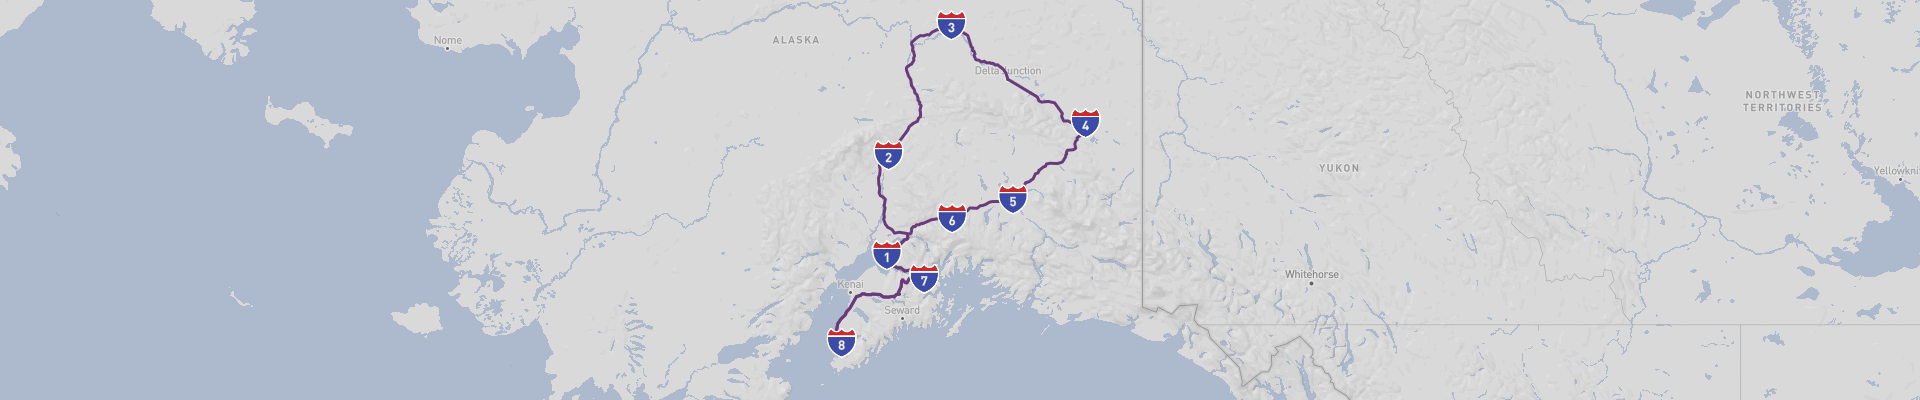 Itinéraire Alaska 